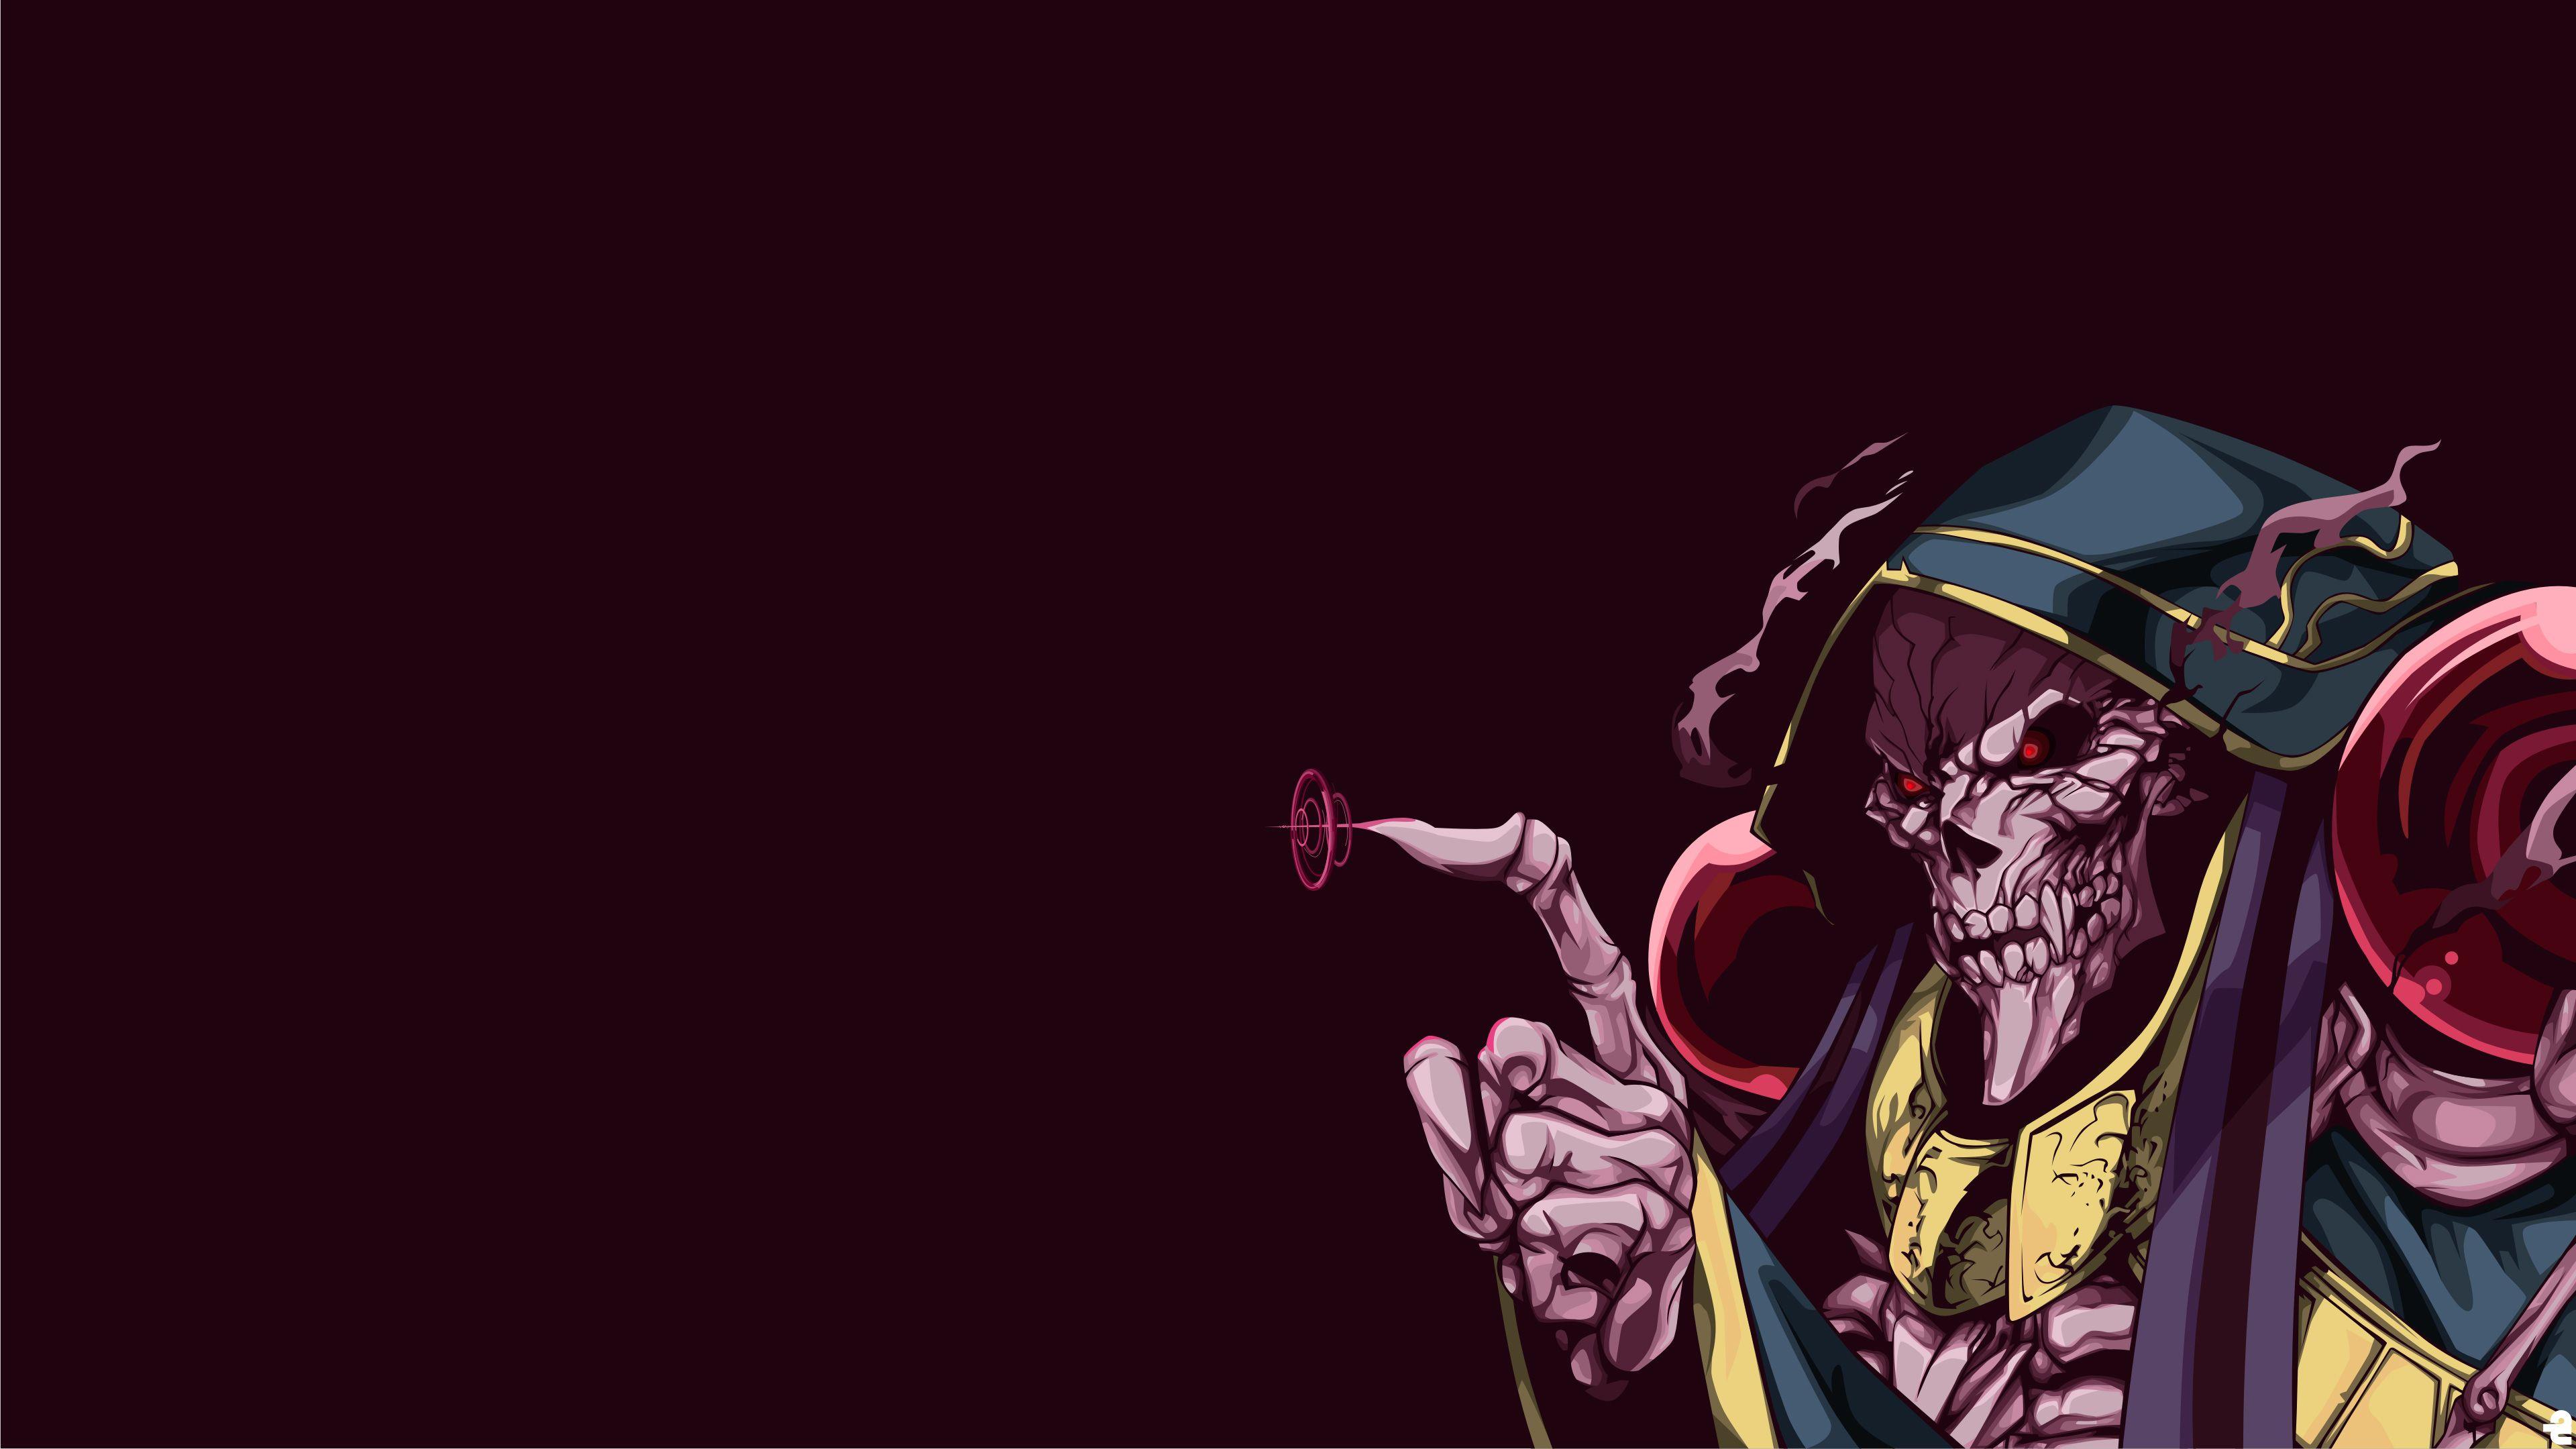 Ainz Ooal Gown  Momonga  Overlord 4K  Animated Theme  Live Desktop  Wallpapers